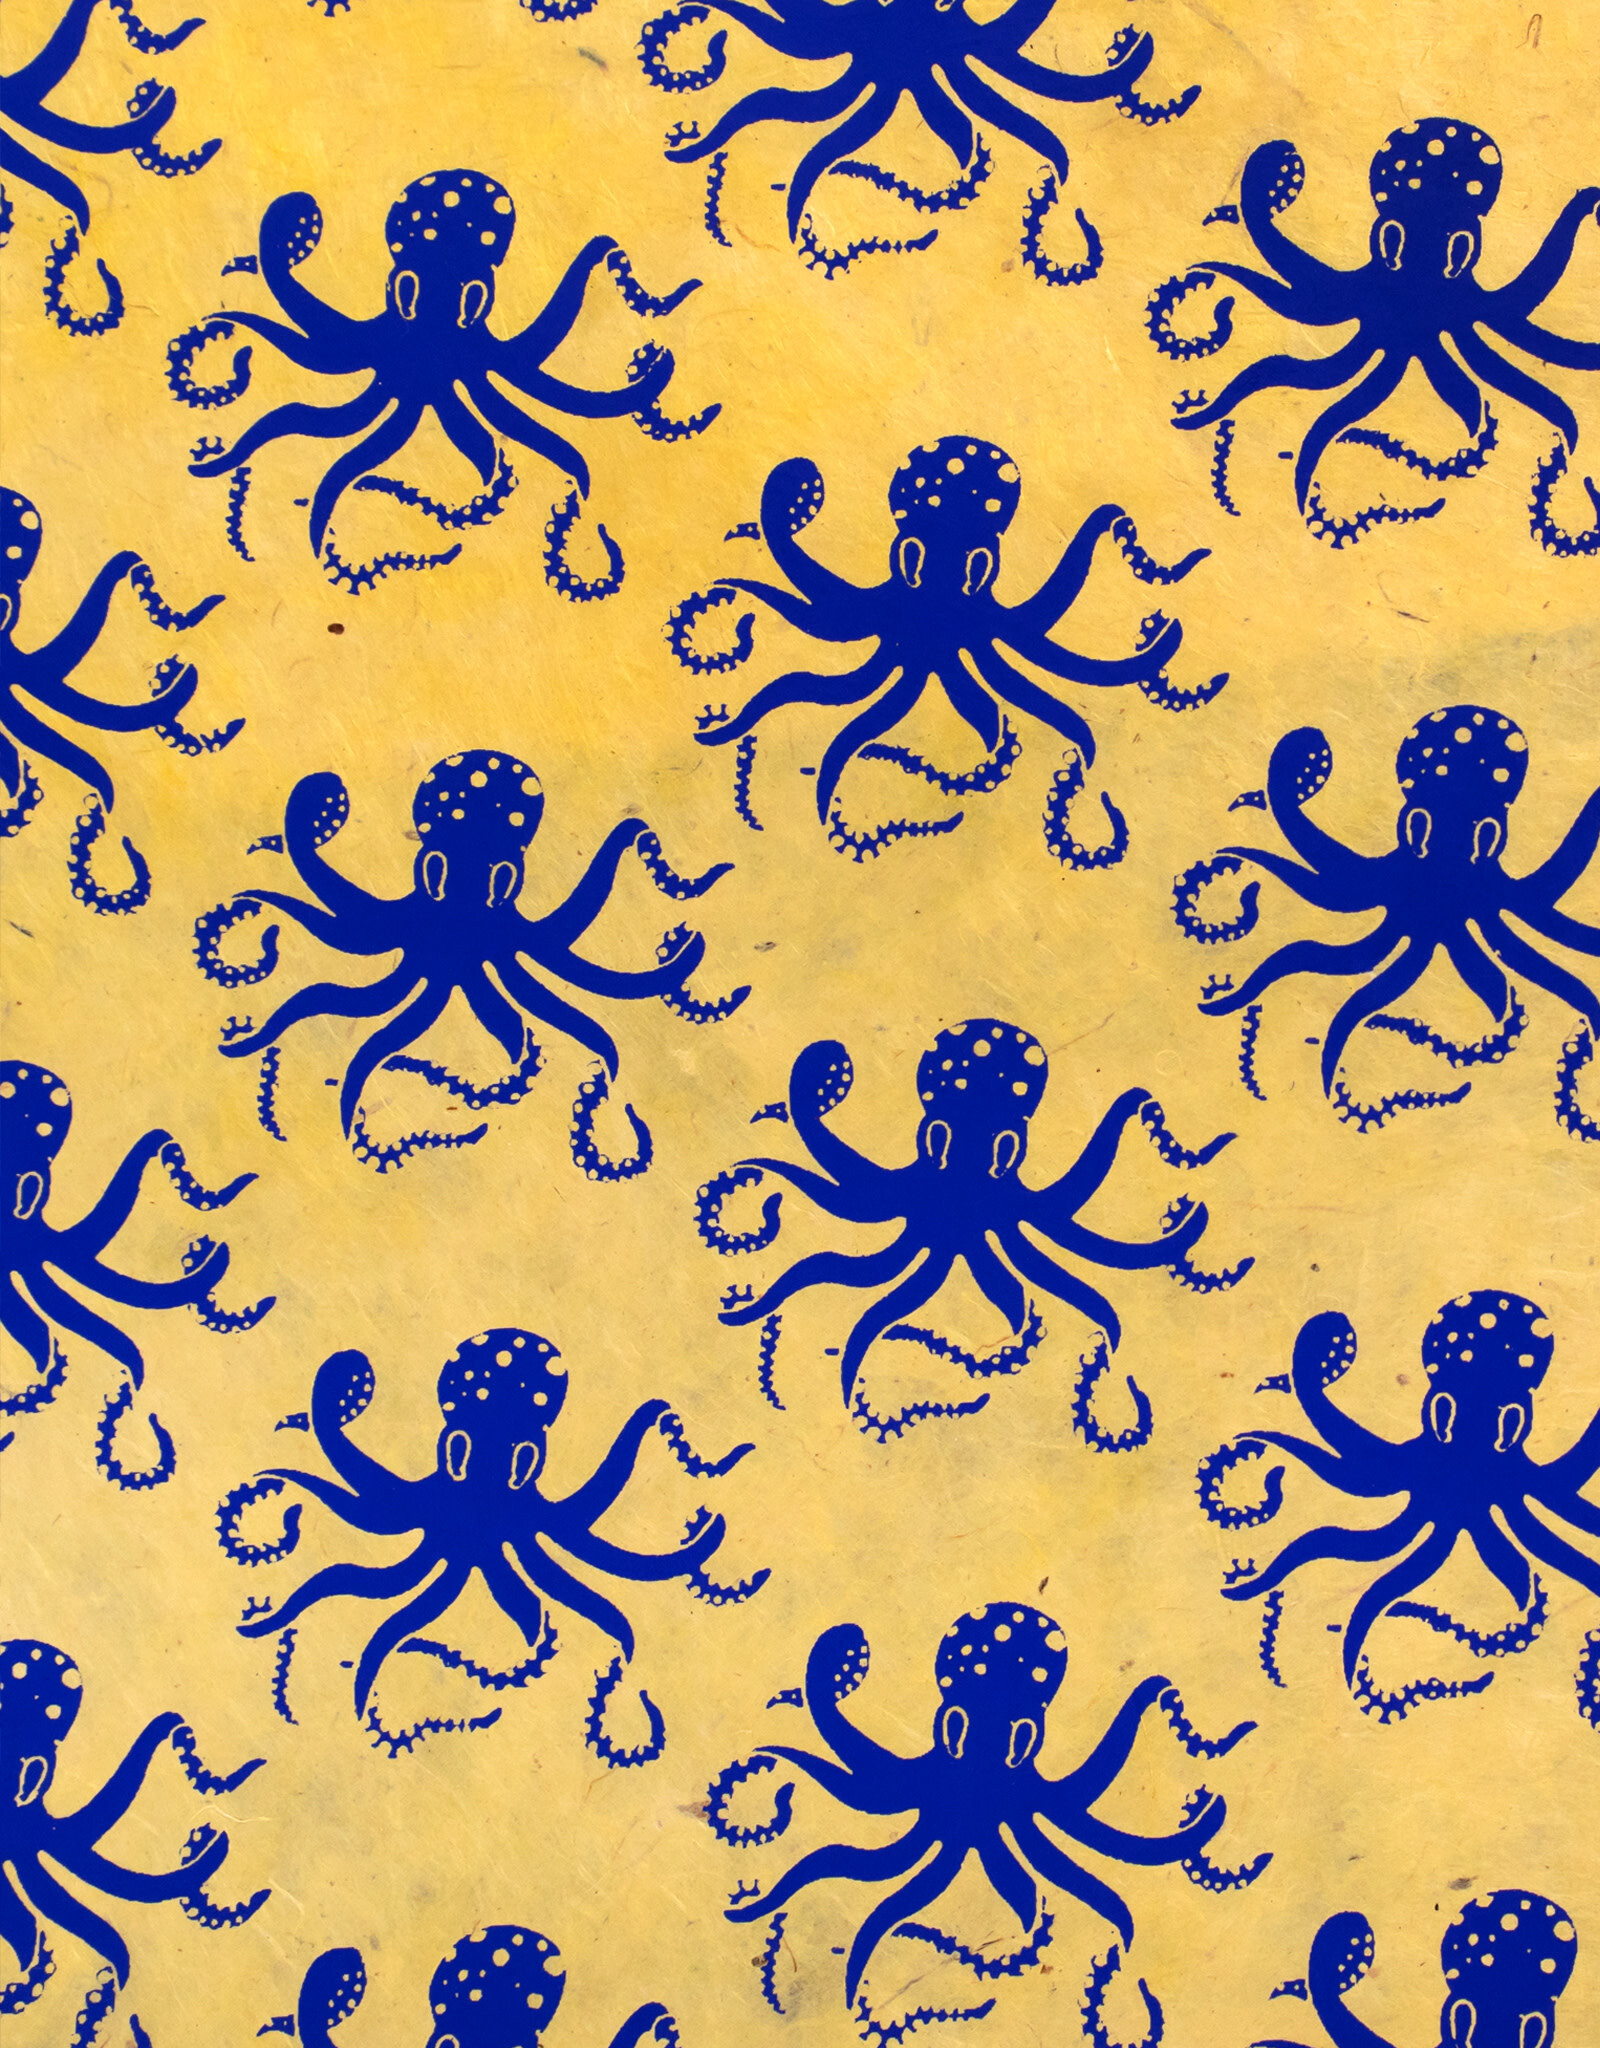 AITOH Aitoh Lokta Printed Octopus Blue on Yellow, 19 .5" x 29 .5"